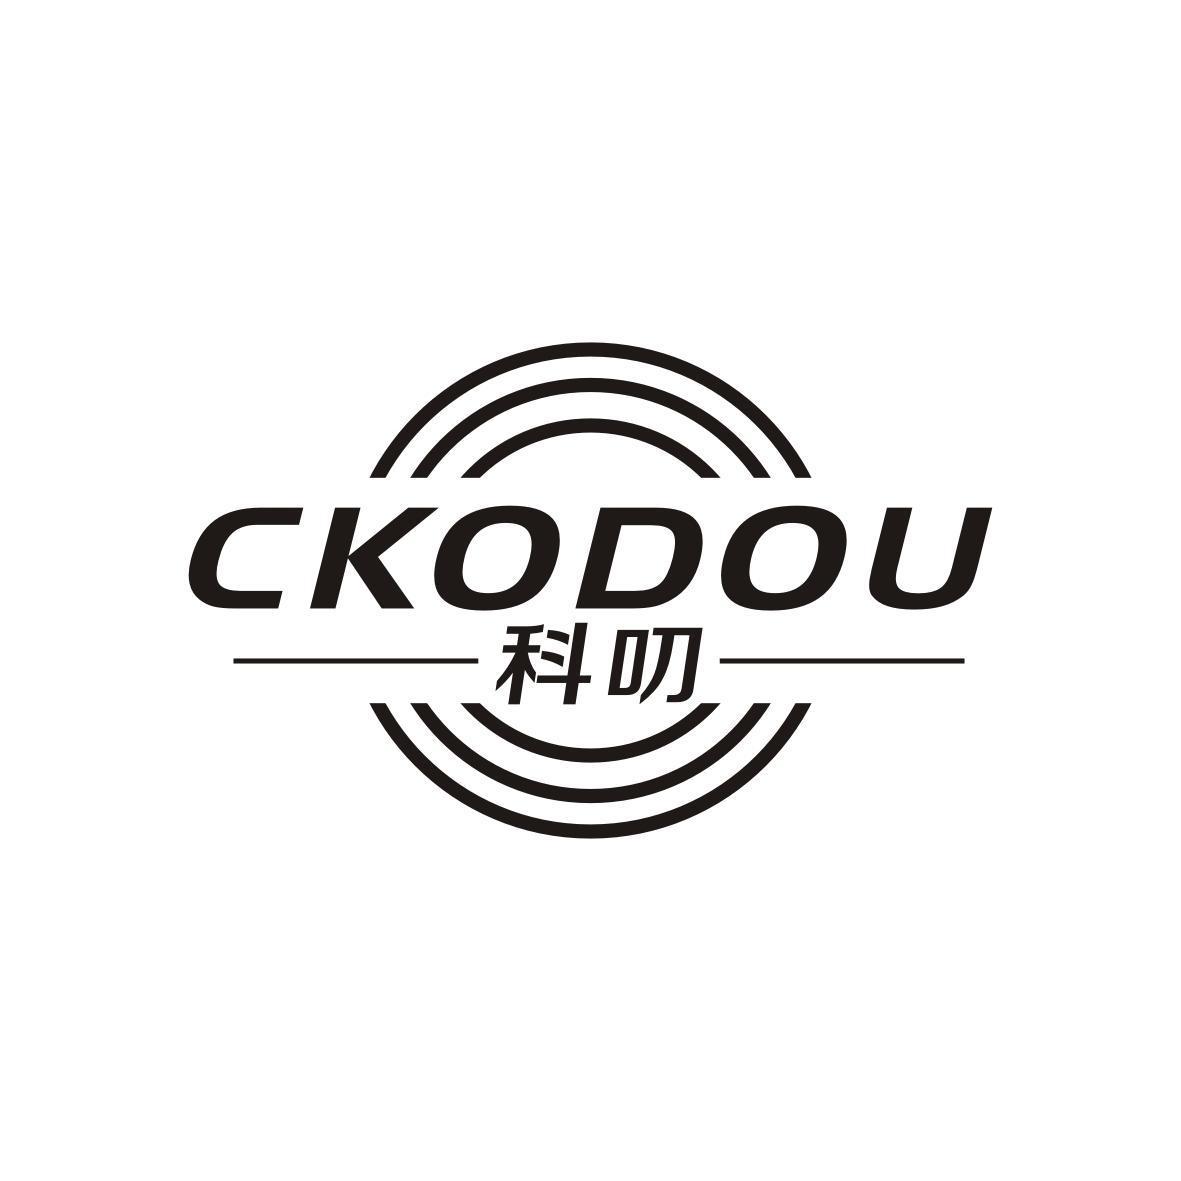 v-29341 科叨
CKODOU